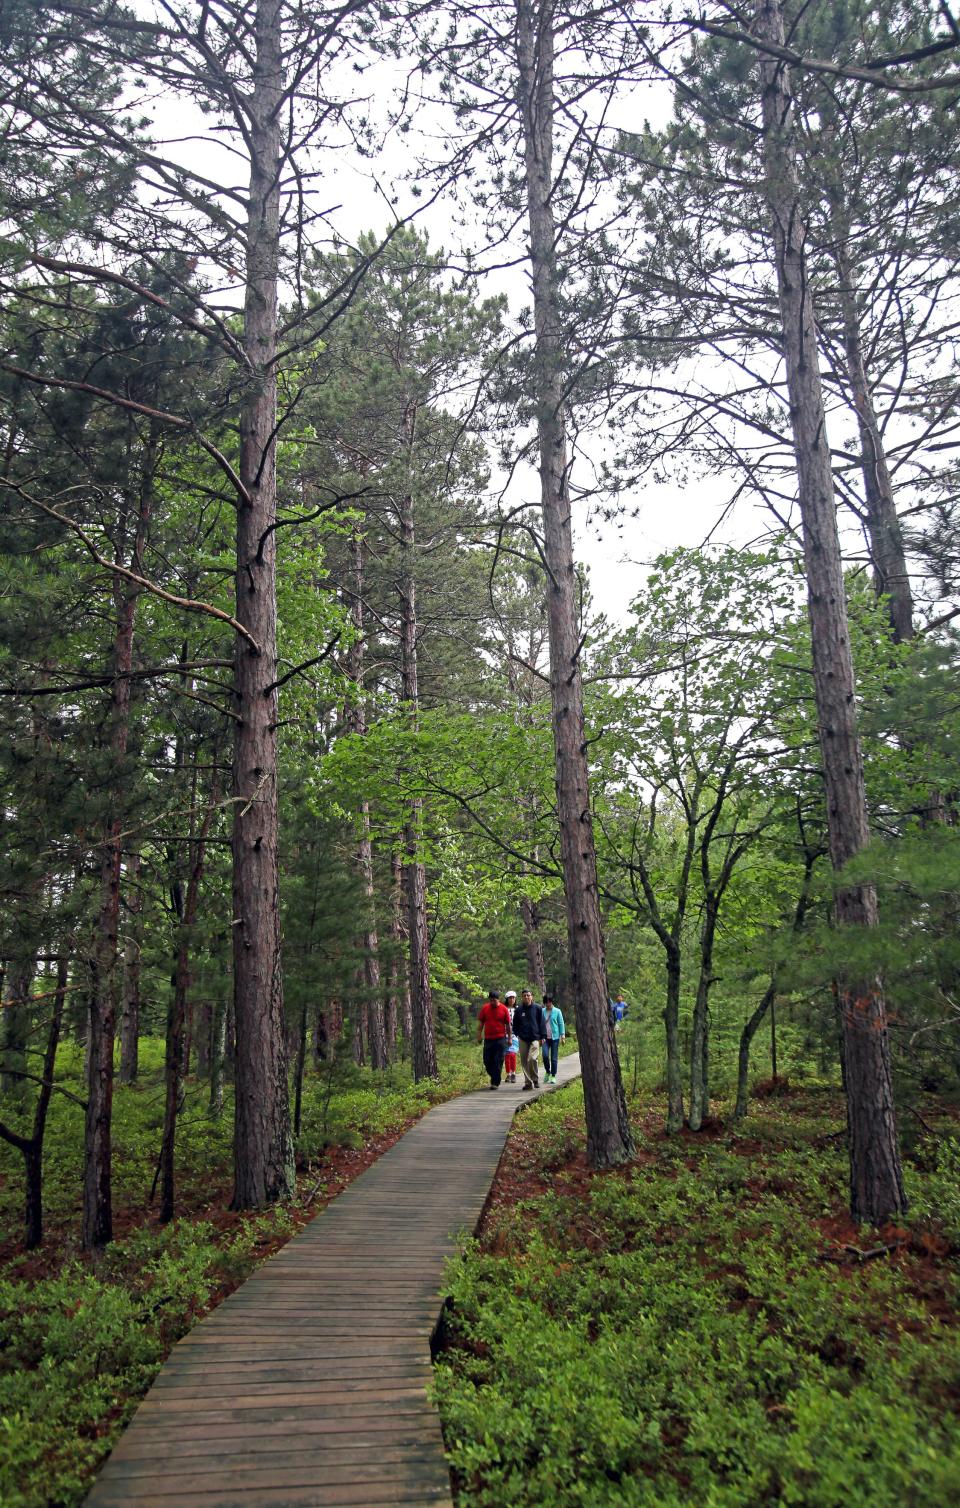 The Boardwalk Trail travels through forest and bog landscapes along Lake Superior at Big Bay State Park on Madeline Island.